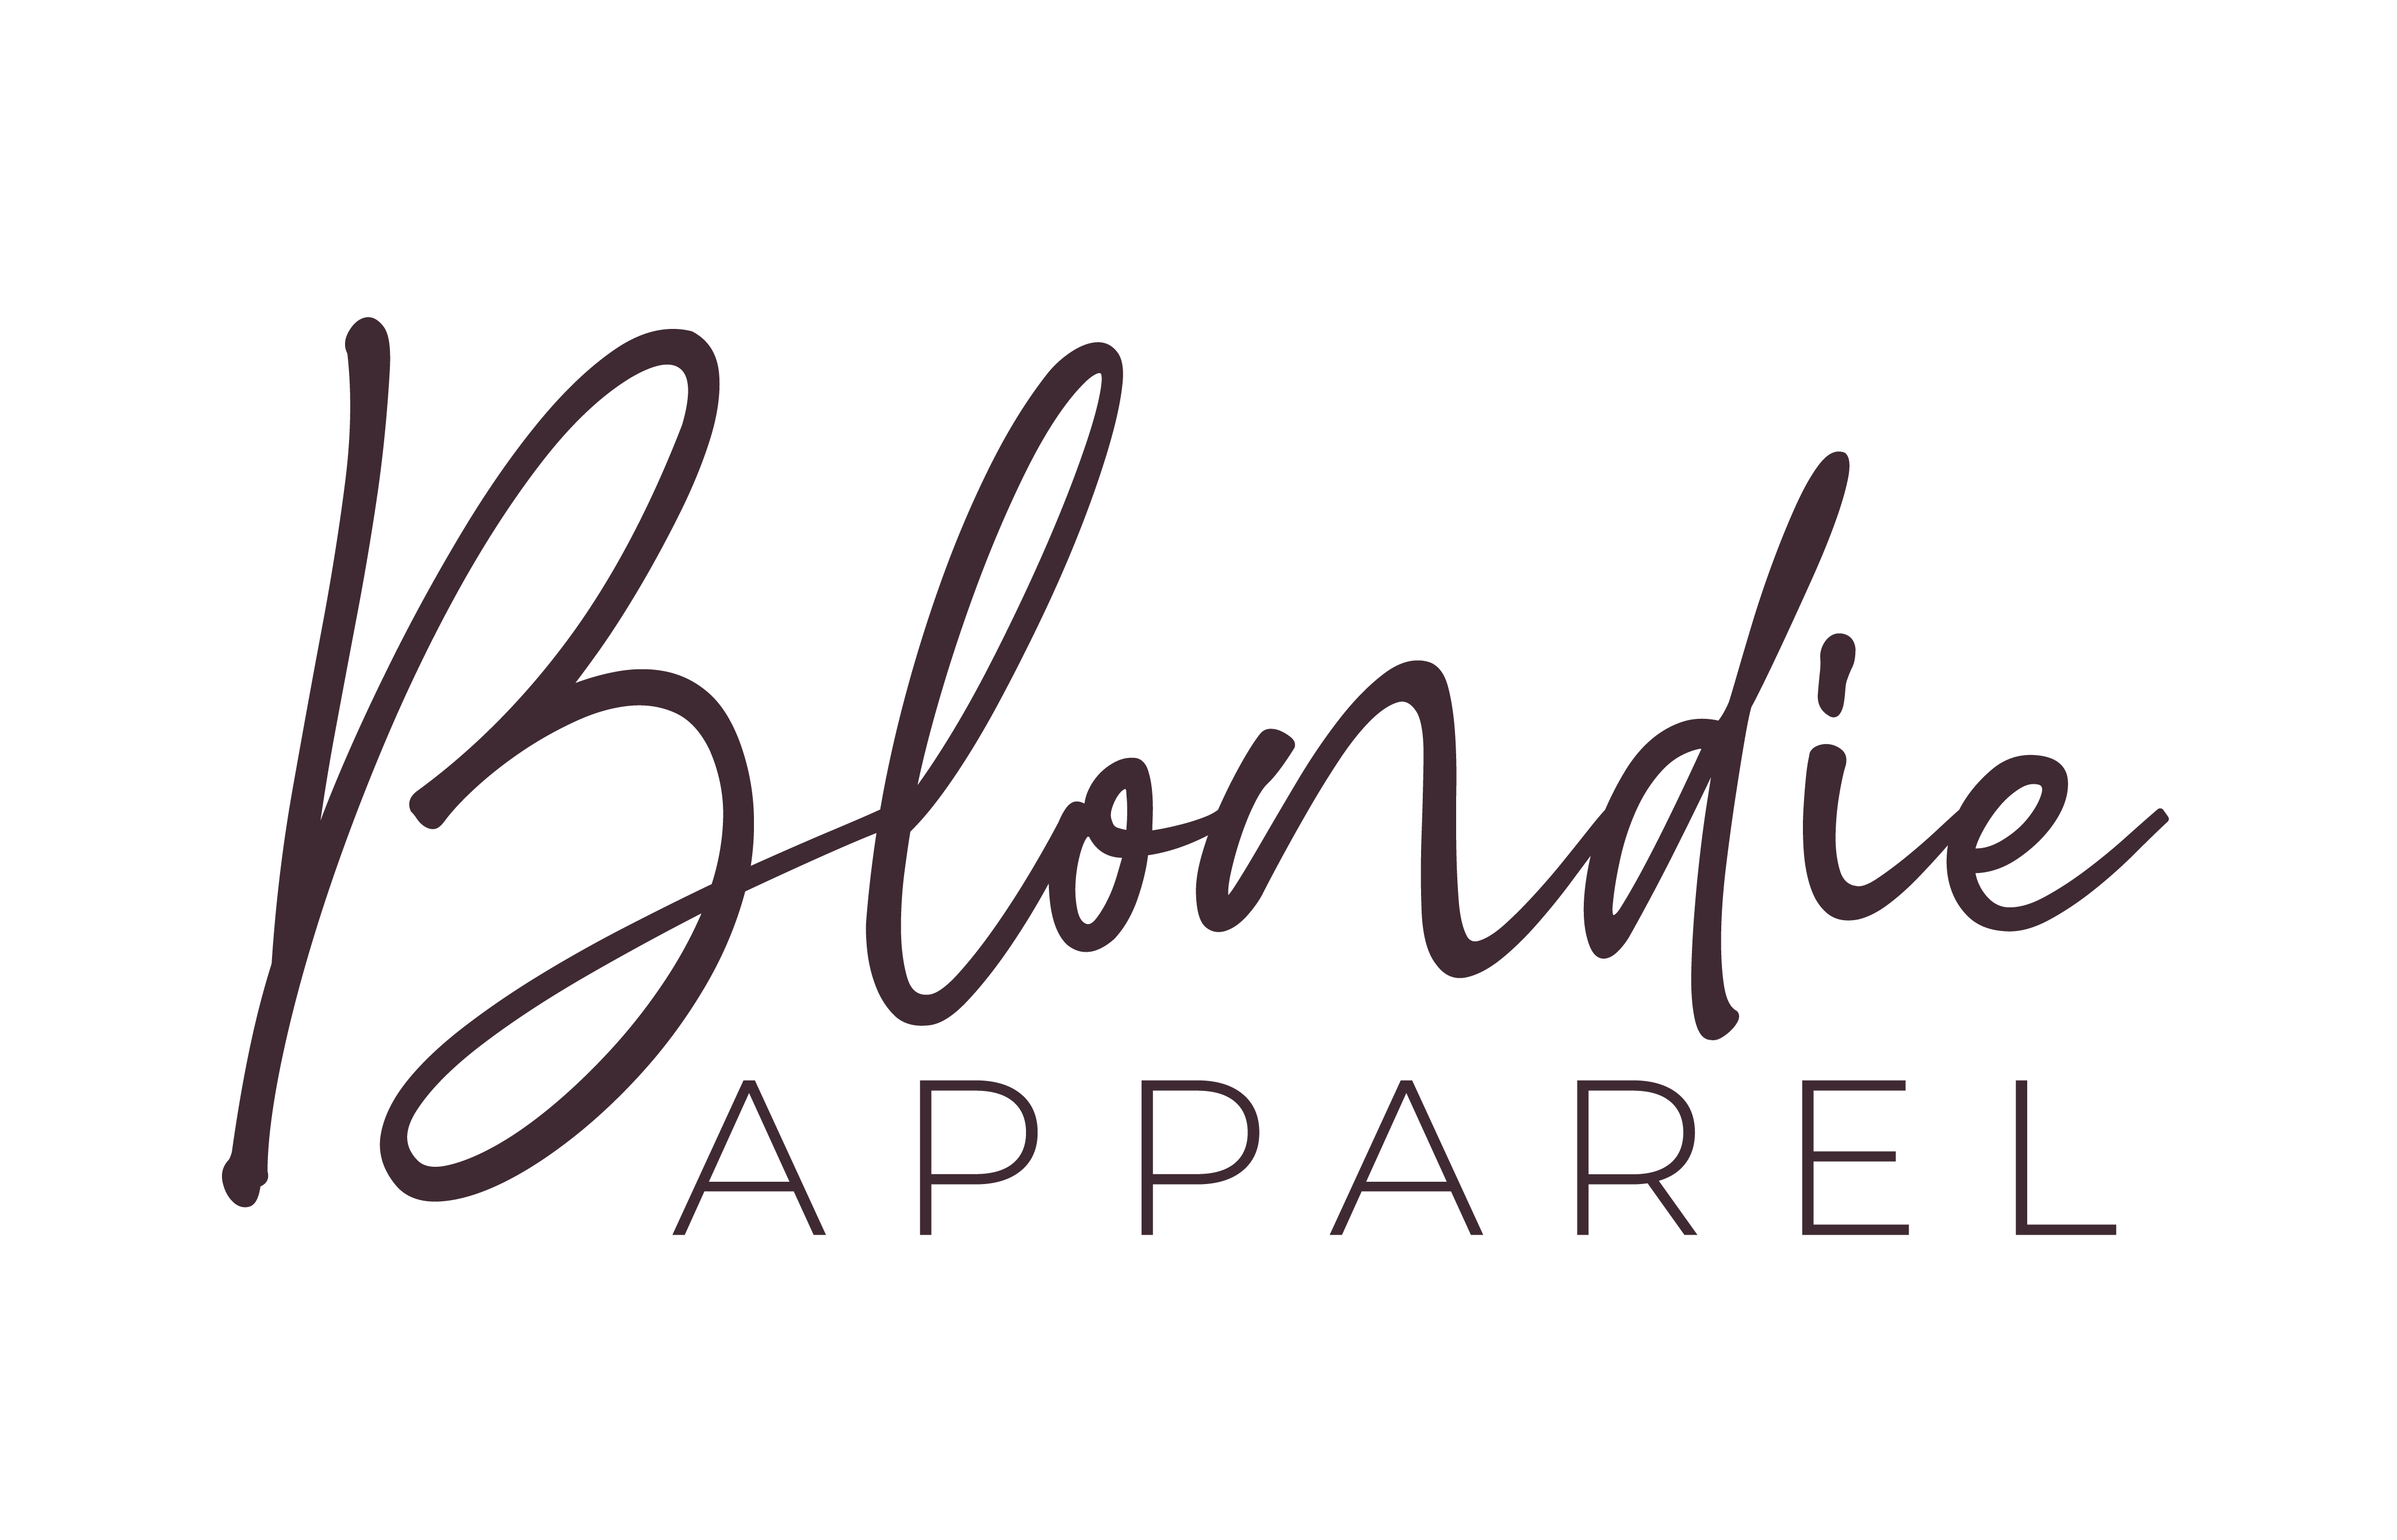 Stockists Blondie Apparel